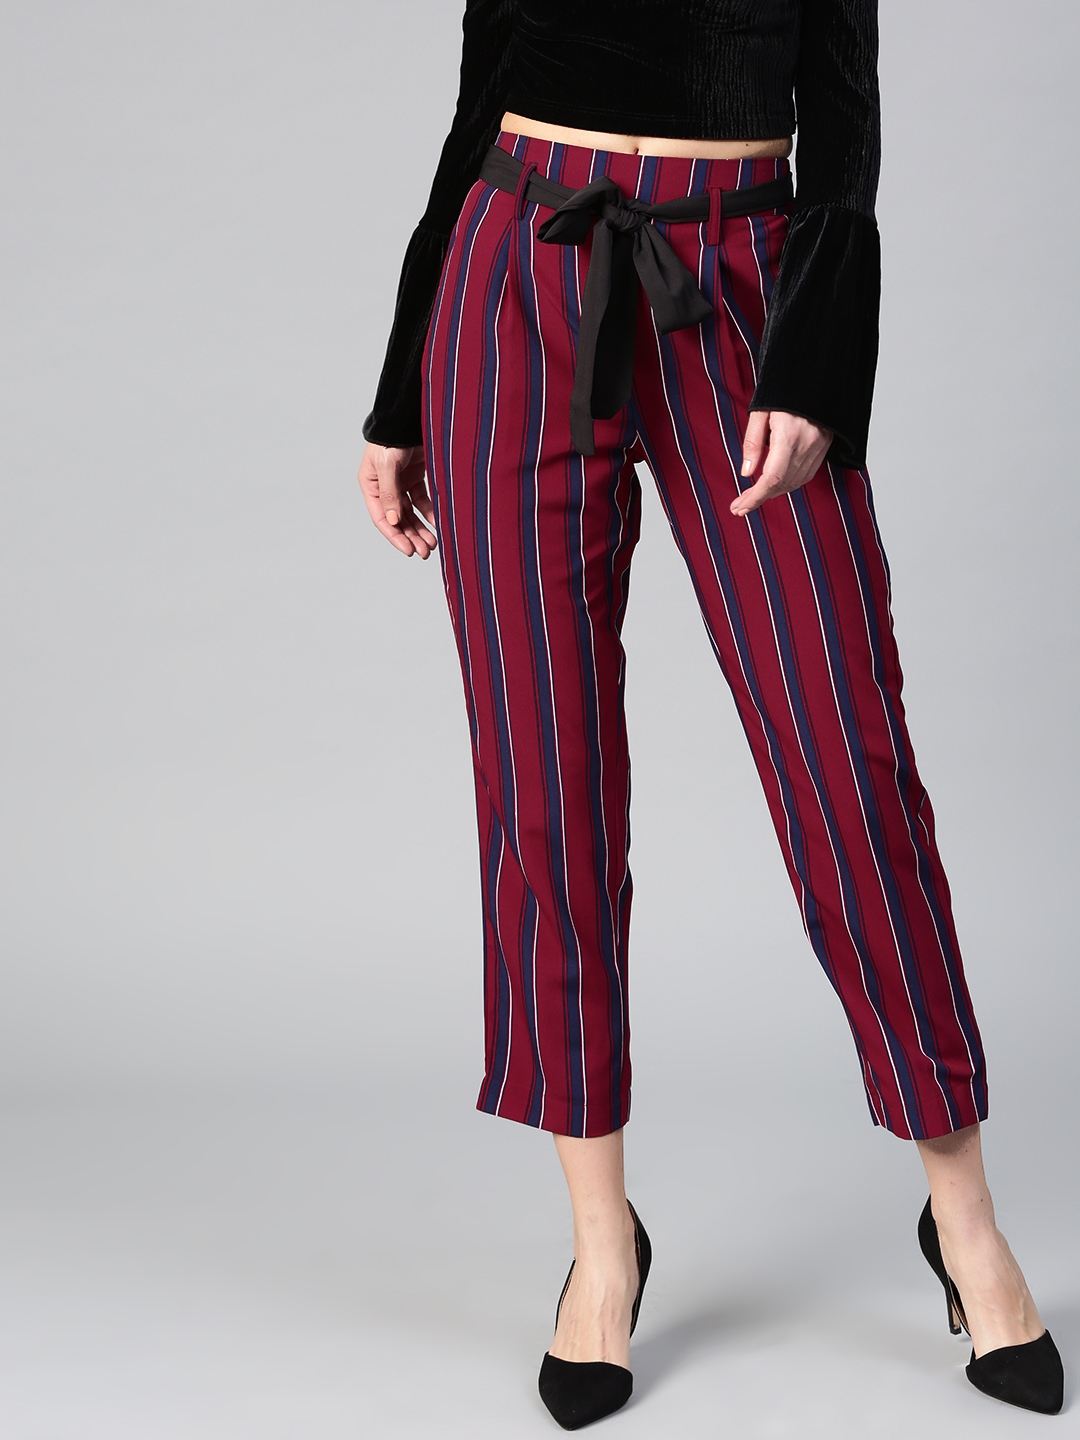 maroon striped pants